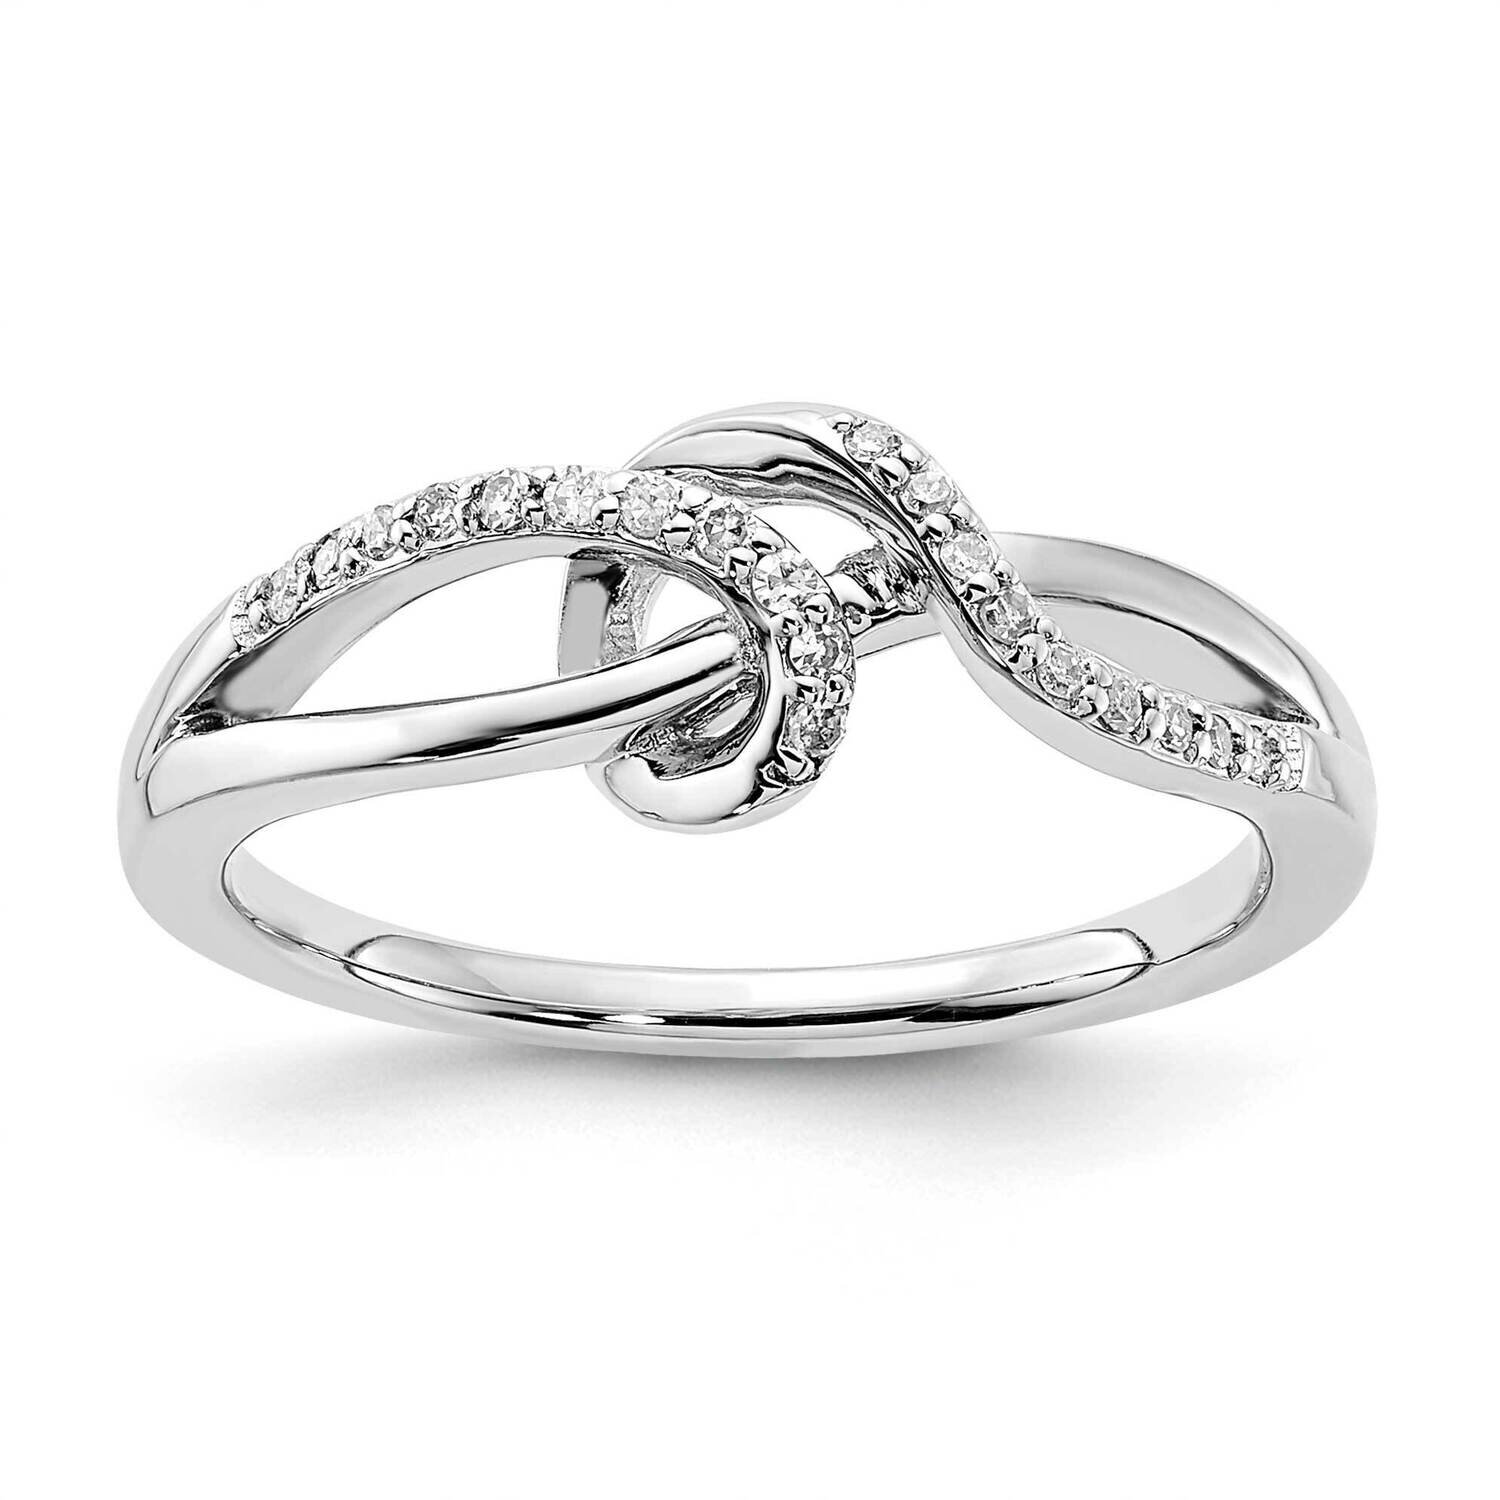 Sterling Silver Diamond Fashion Ring RLD3678-SSS43-7